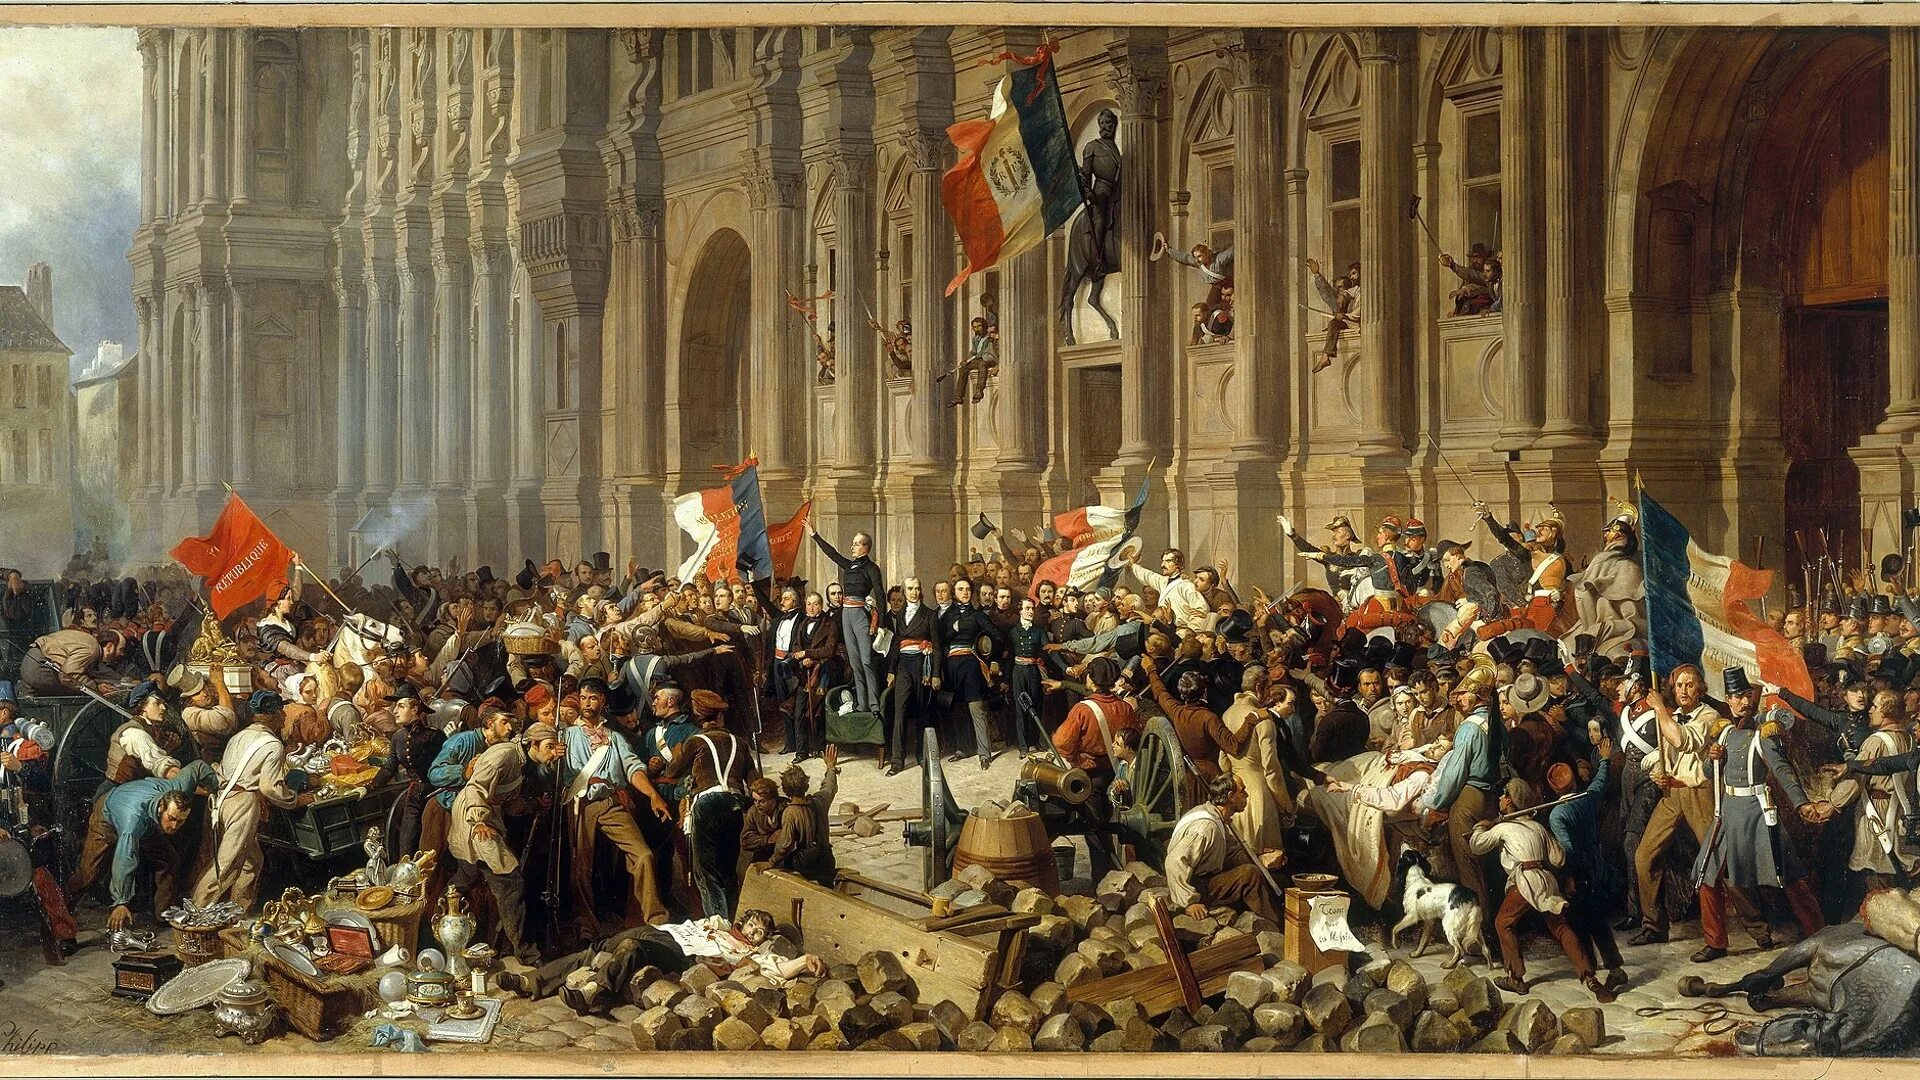 Француз путь. Великая французская революция 1848-1849. Великая французская революция 1789-1792. Французская революция 1789 Наполеон Бонапарт.